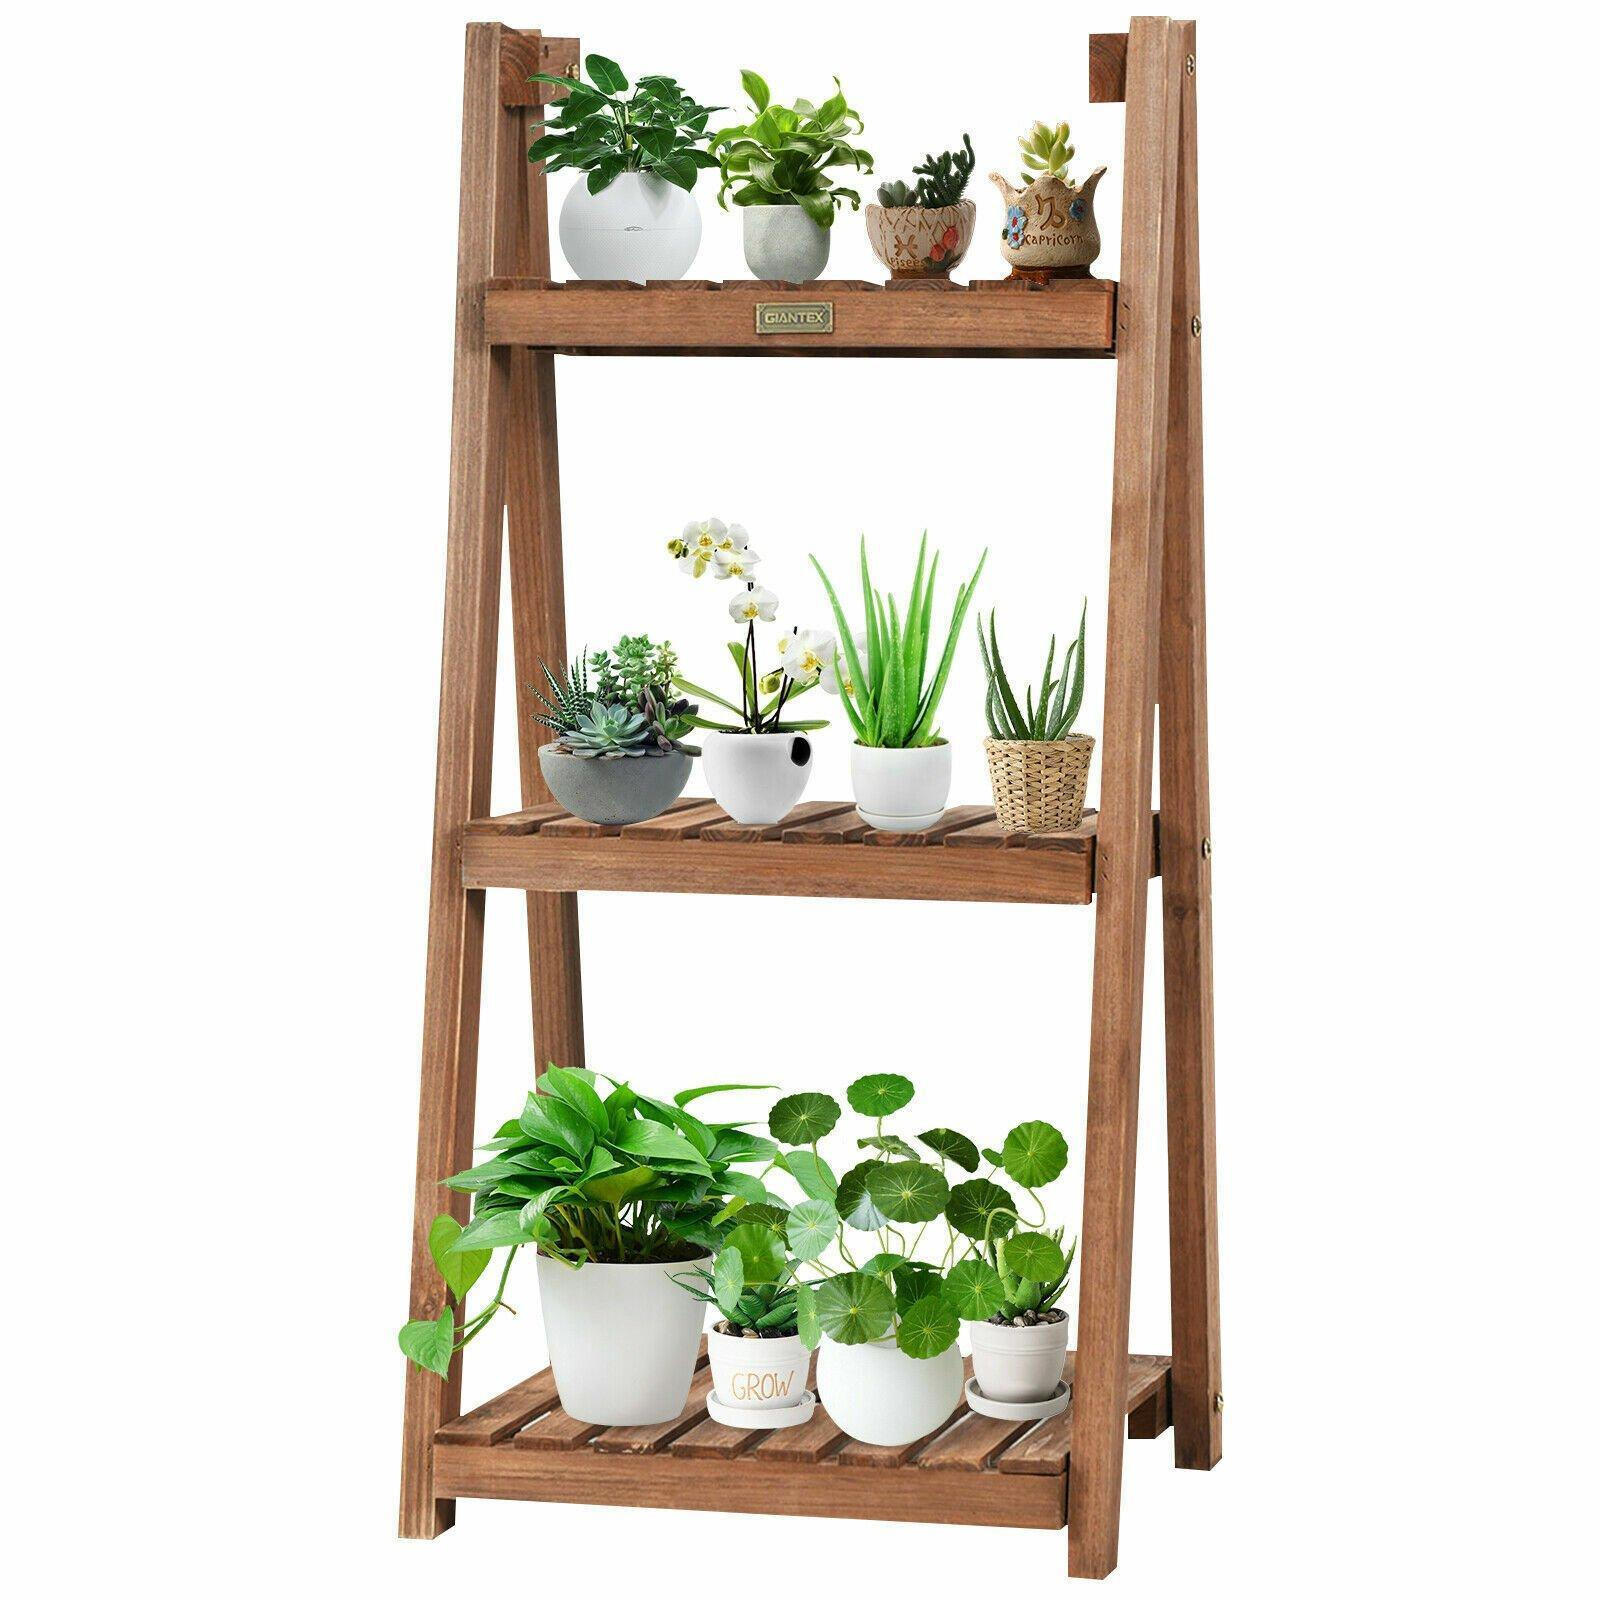 3 Tier Wooden Plant Stand Folding Flower Shelf Display Ladder Free Standing Flowers Rack Shelves - image 1